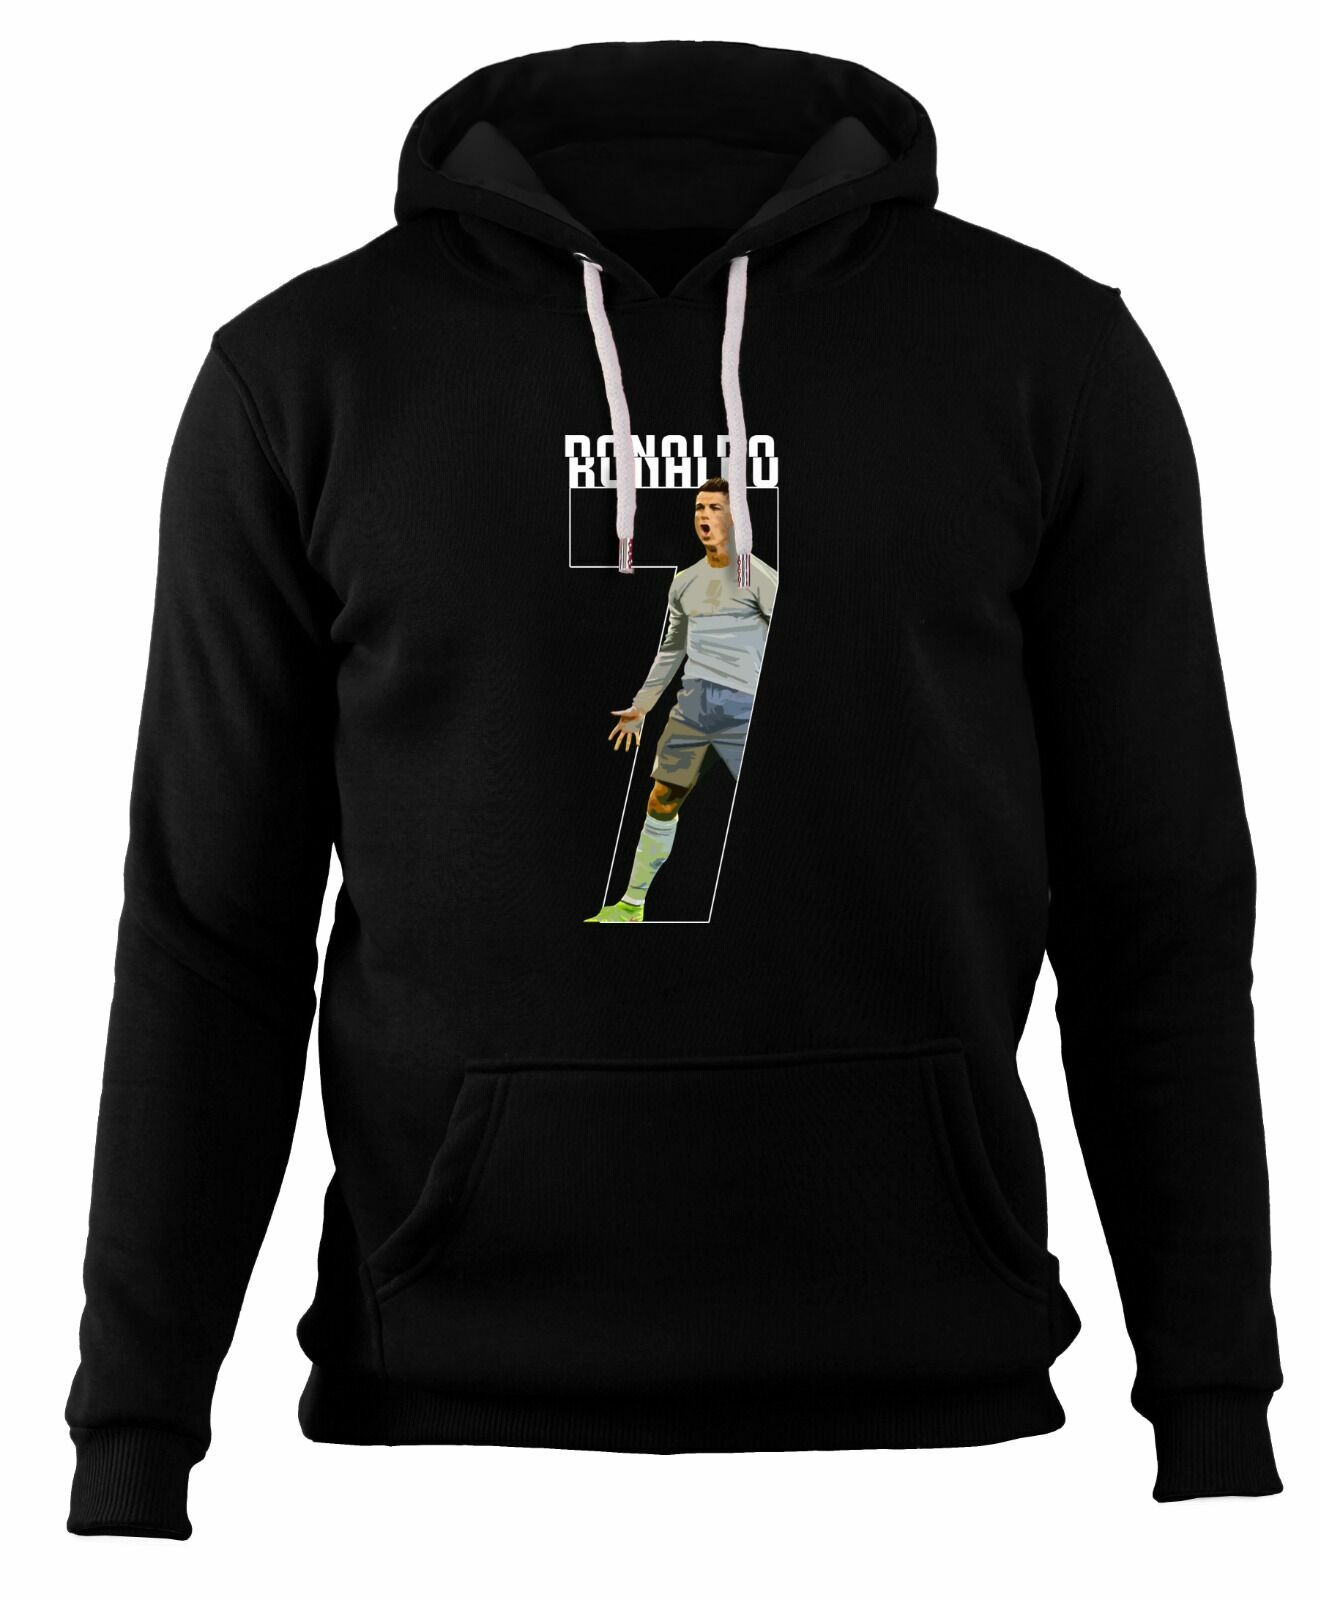 C.Ronaldo Sweatshirt